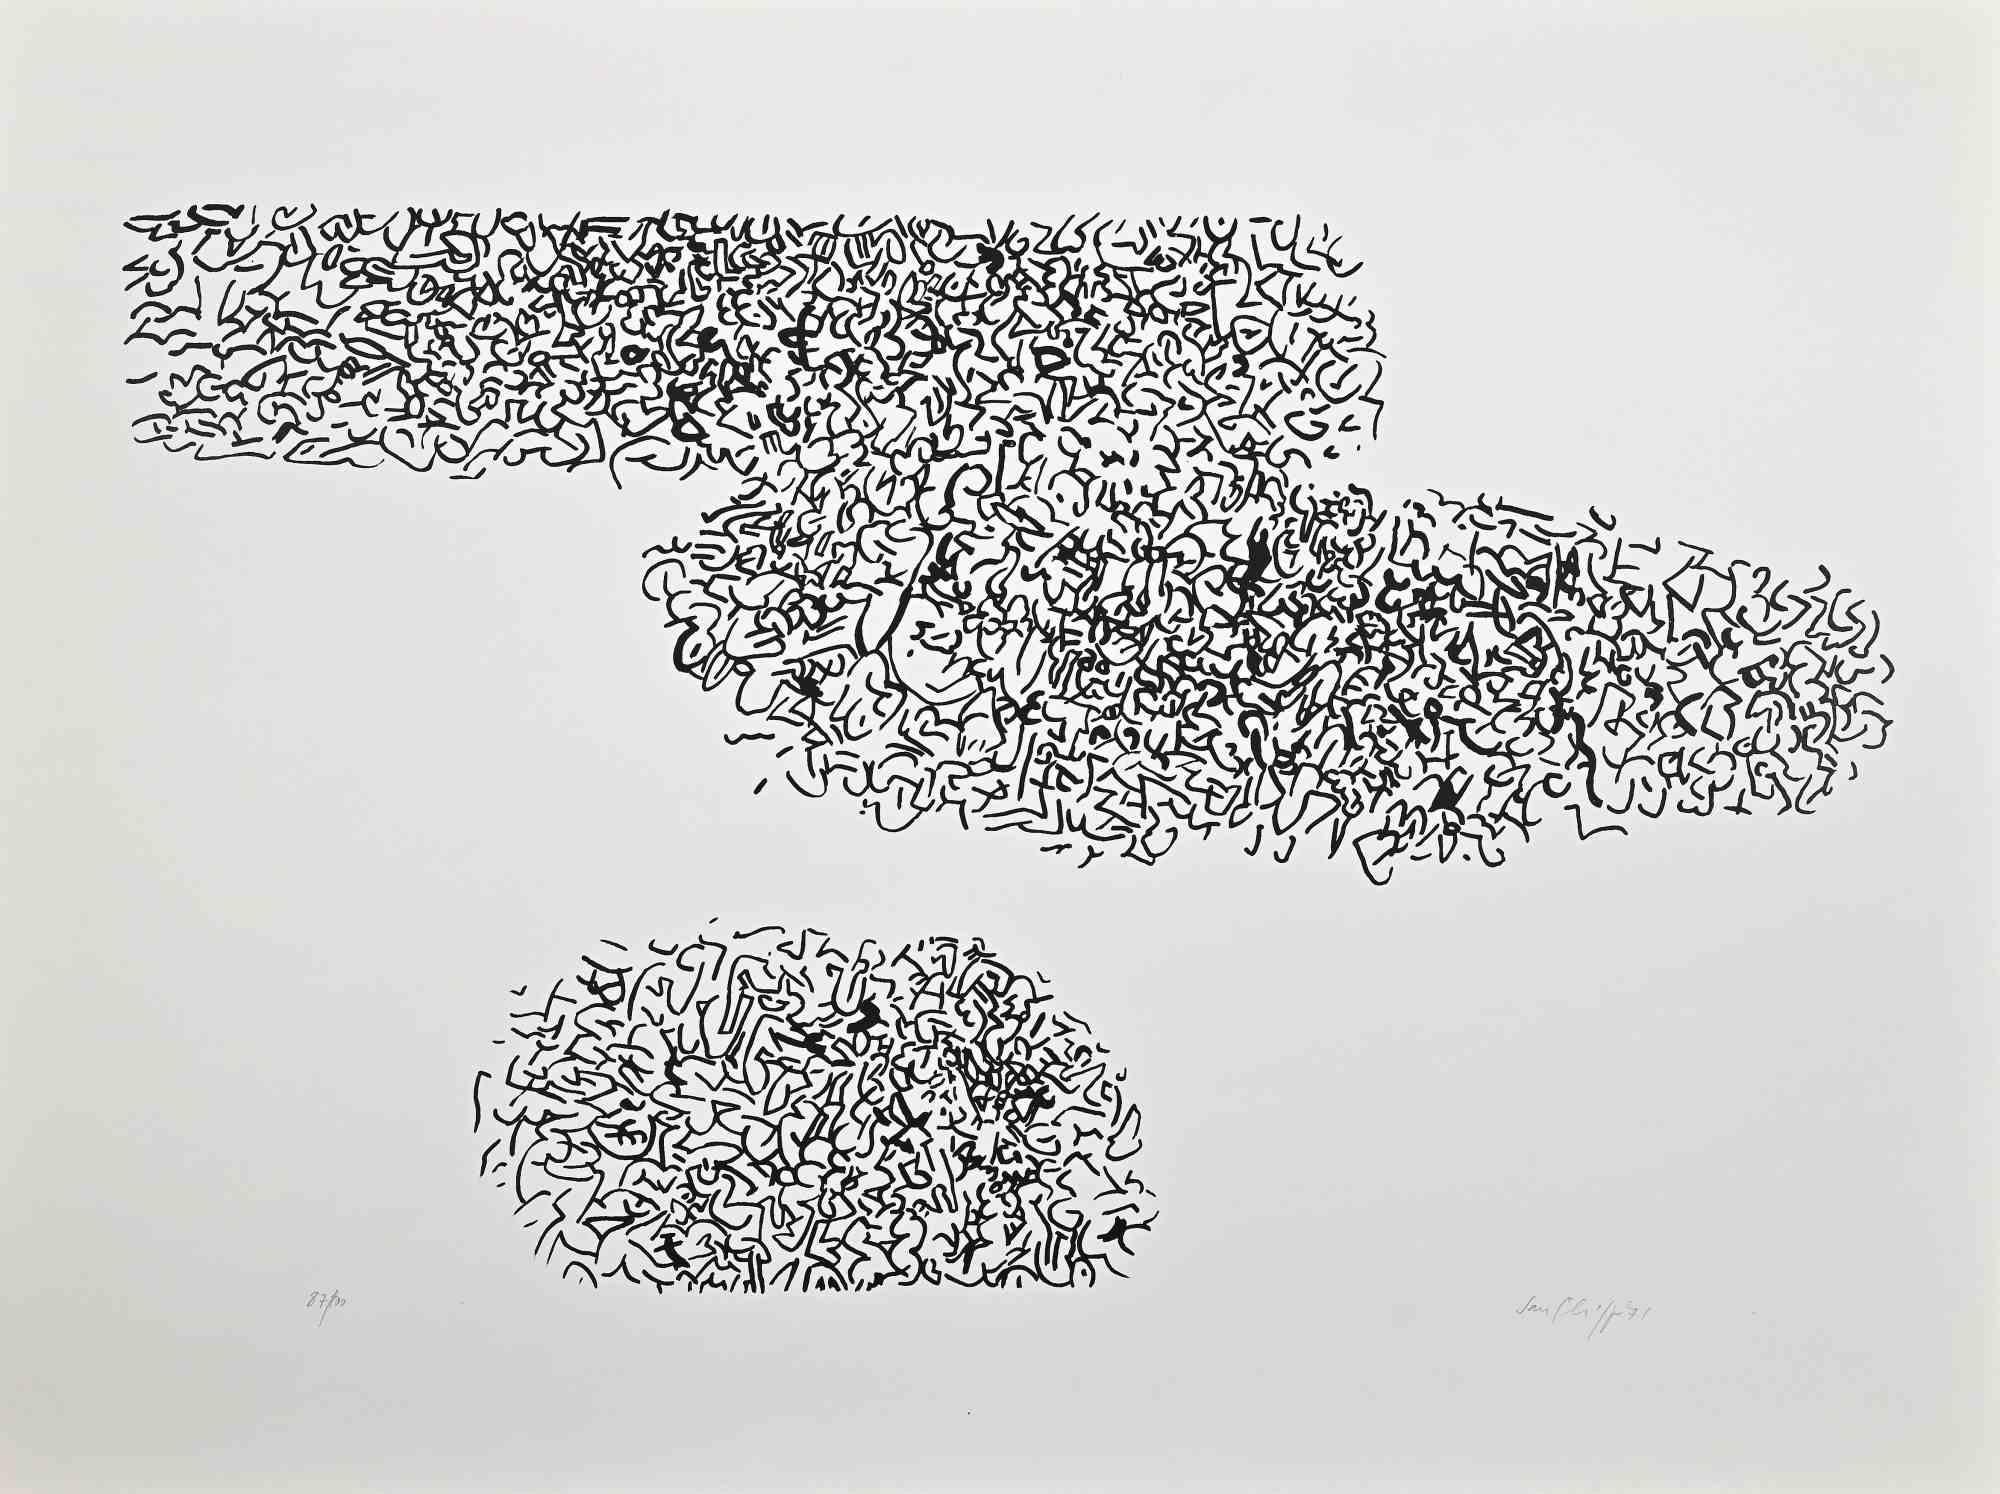 Abstract Composition - Screen Print by Mario Padovan - 1971